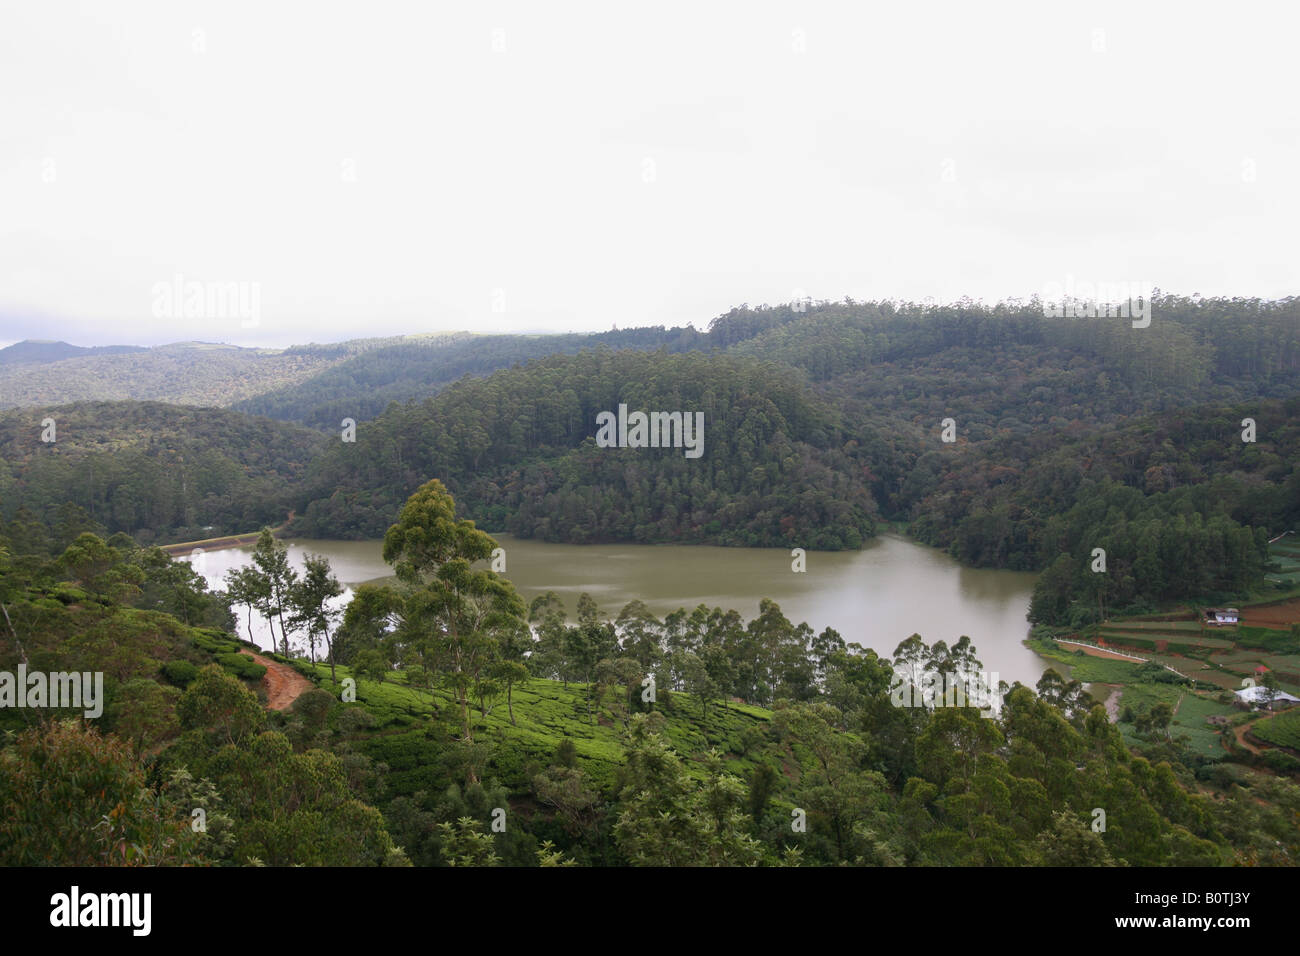 Spectacular view of a tea plantation in near Nuwara Eliya, Sri Lanka with a lake and misty mountain backdrop. Stock Photo